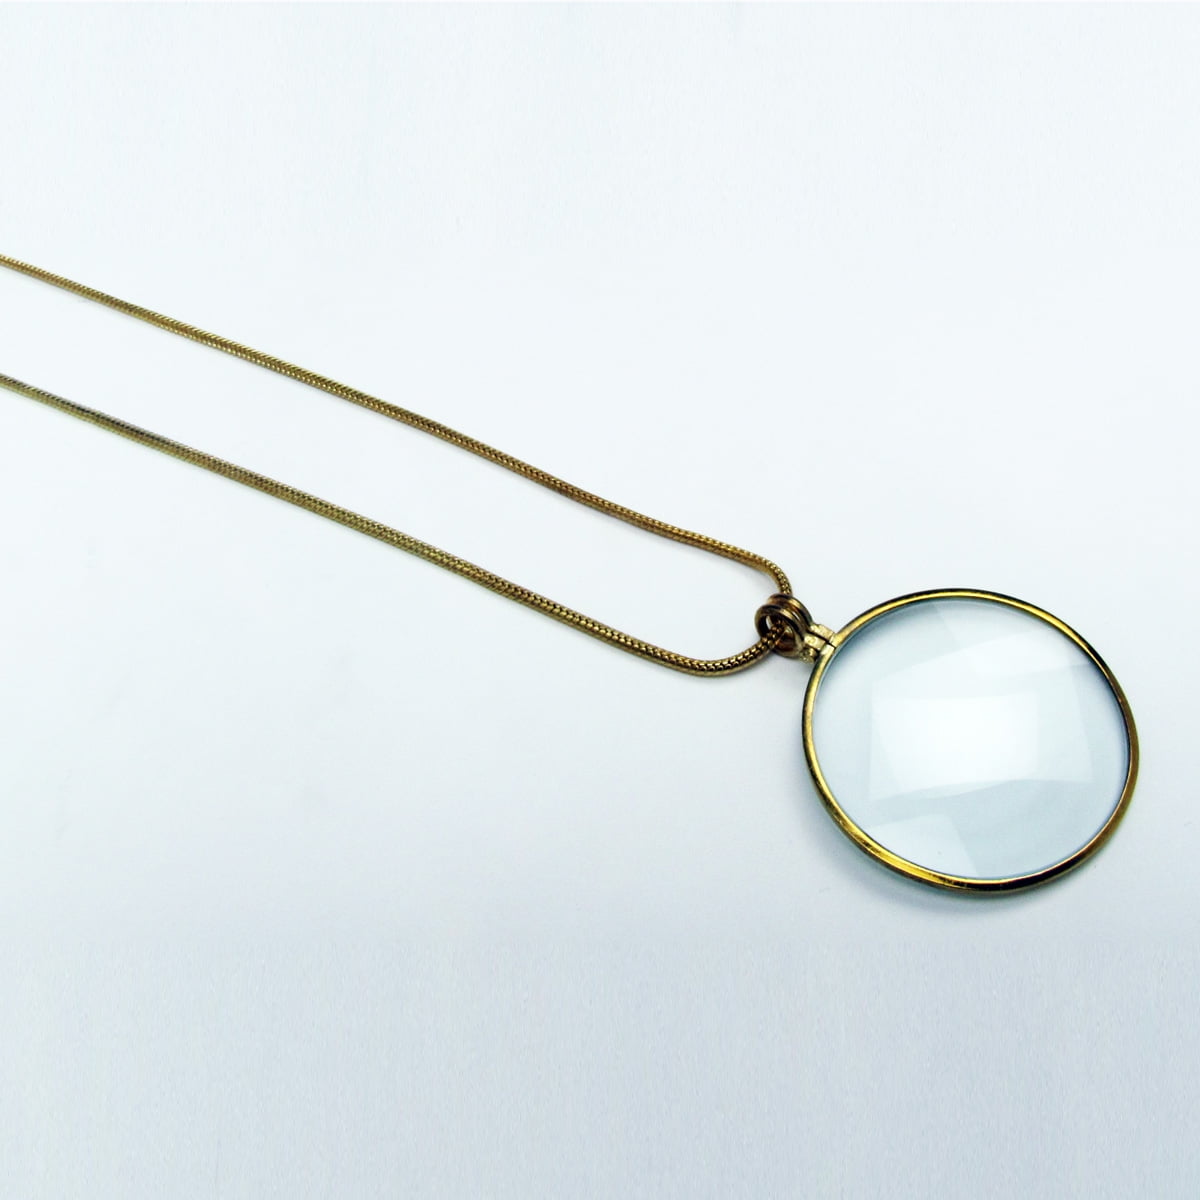 Magnifying Glass Pendant - Wild Almond Burl - Pendant - Mini Magnifying  Pendant - Necklace - Magnifier - Jewelry - Magnifying Glass - Chrome